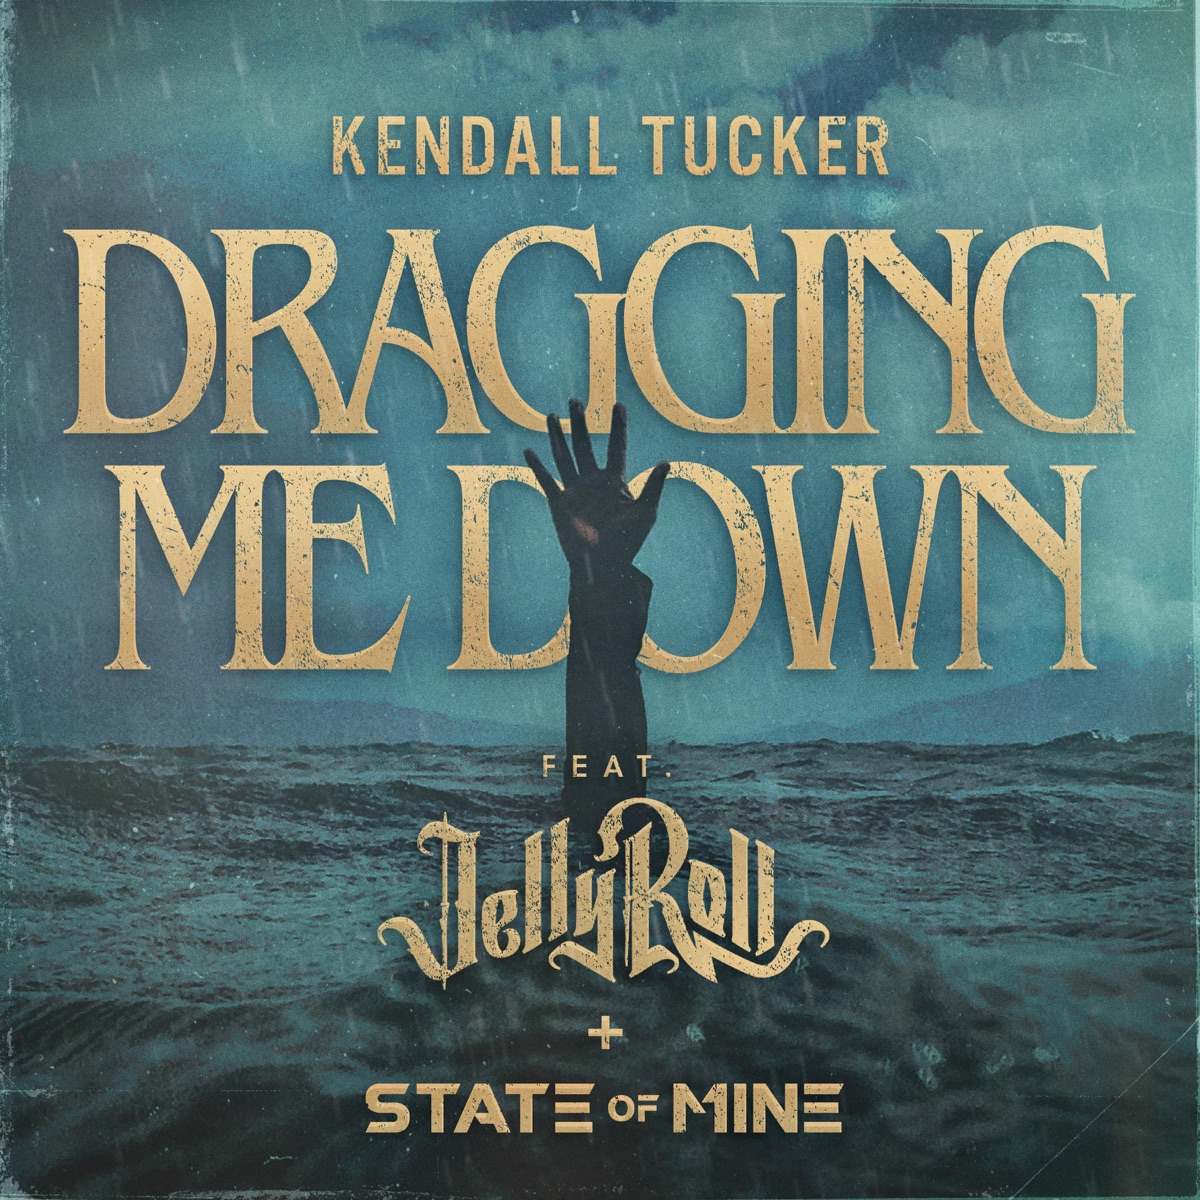 Kendall Tucker “Dragging Me Down” single artwork